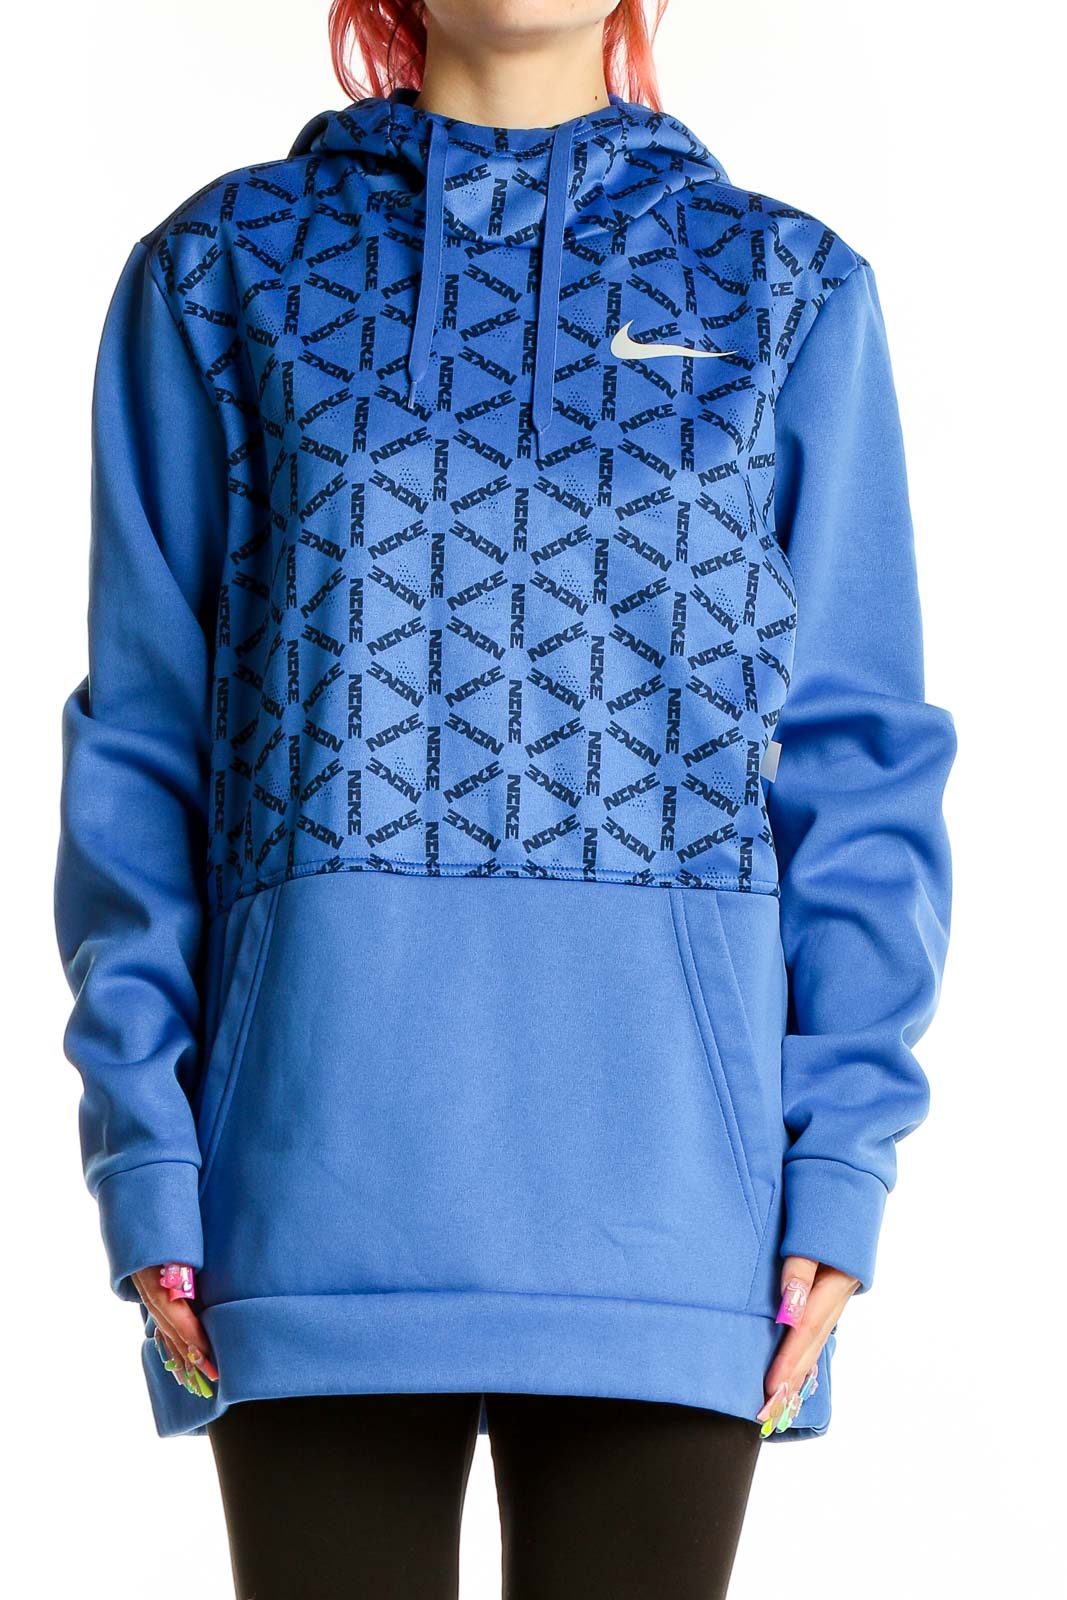 Blue Hooded Sweatshirt Front